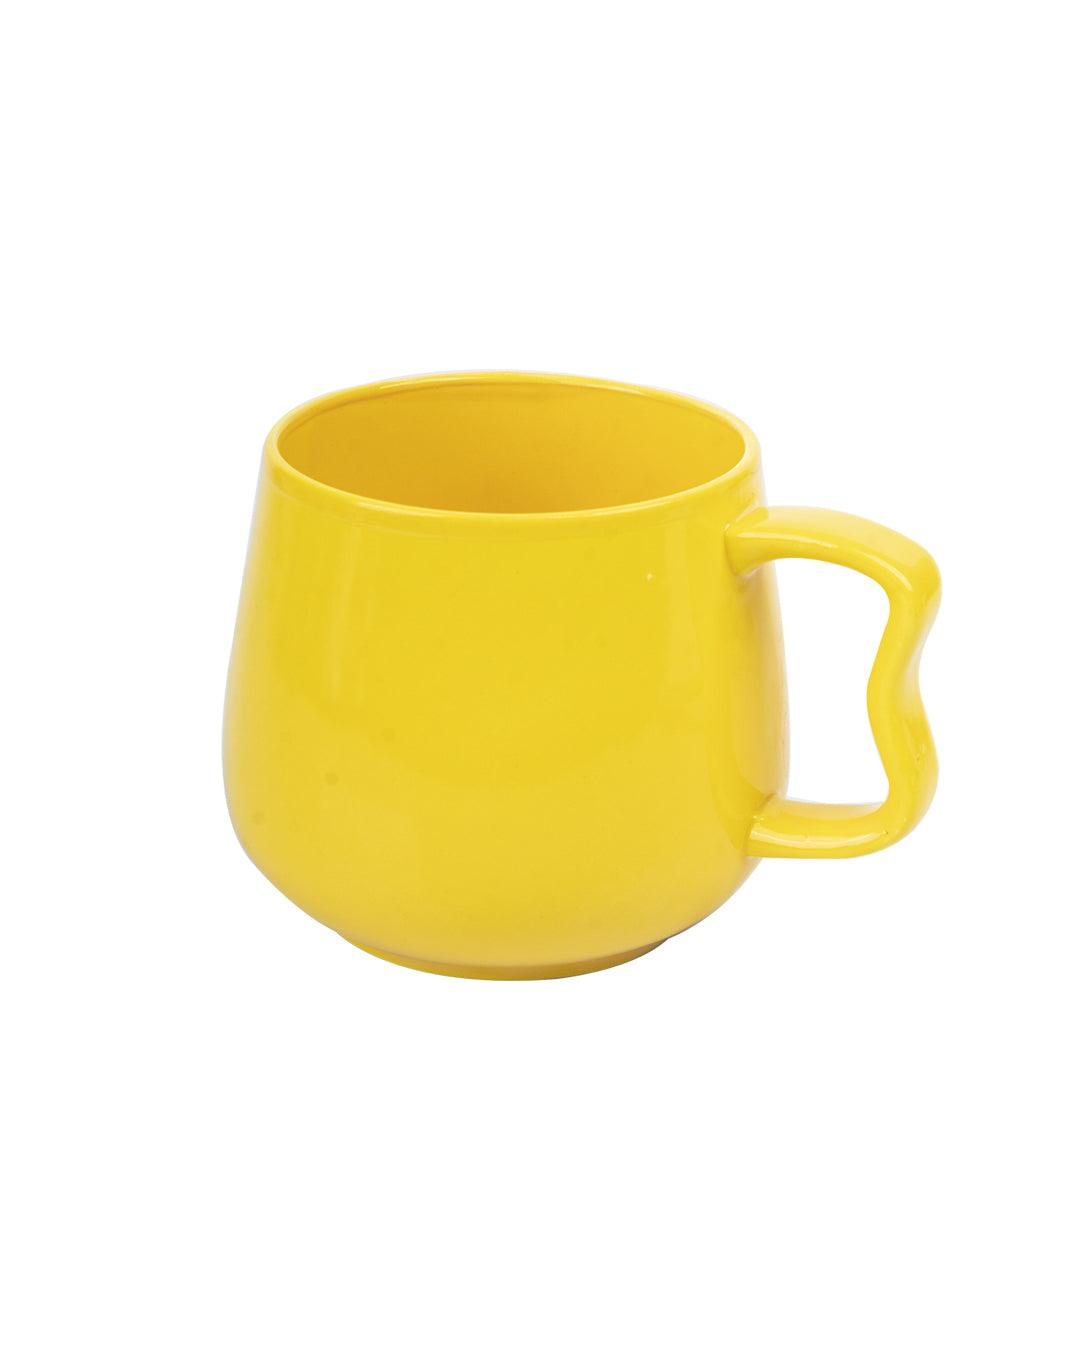 'Crazy Face Emoji' Ceramic Tea & Coffee Mug in Ceramic ( 530 mL, Microwave Safe) - MARKET 99